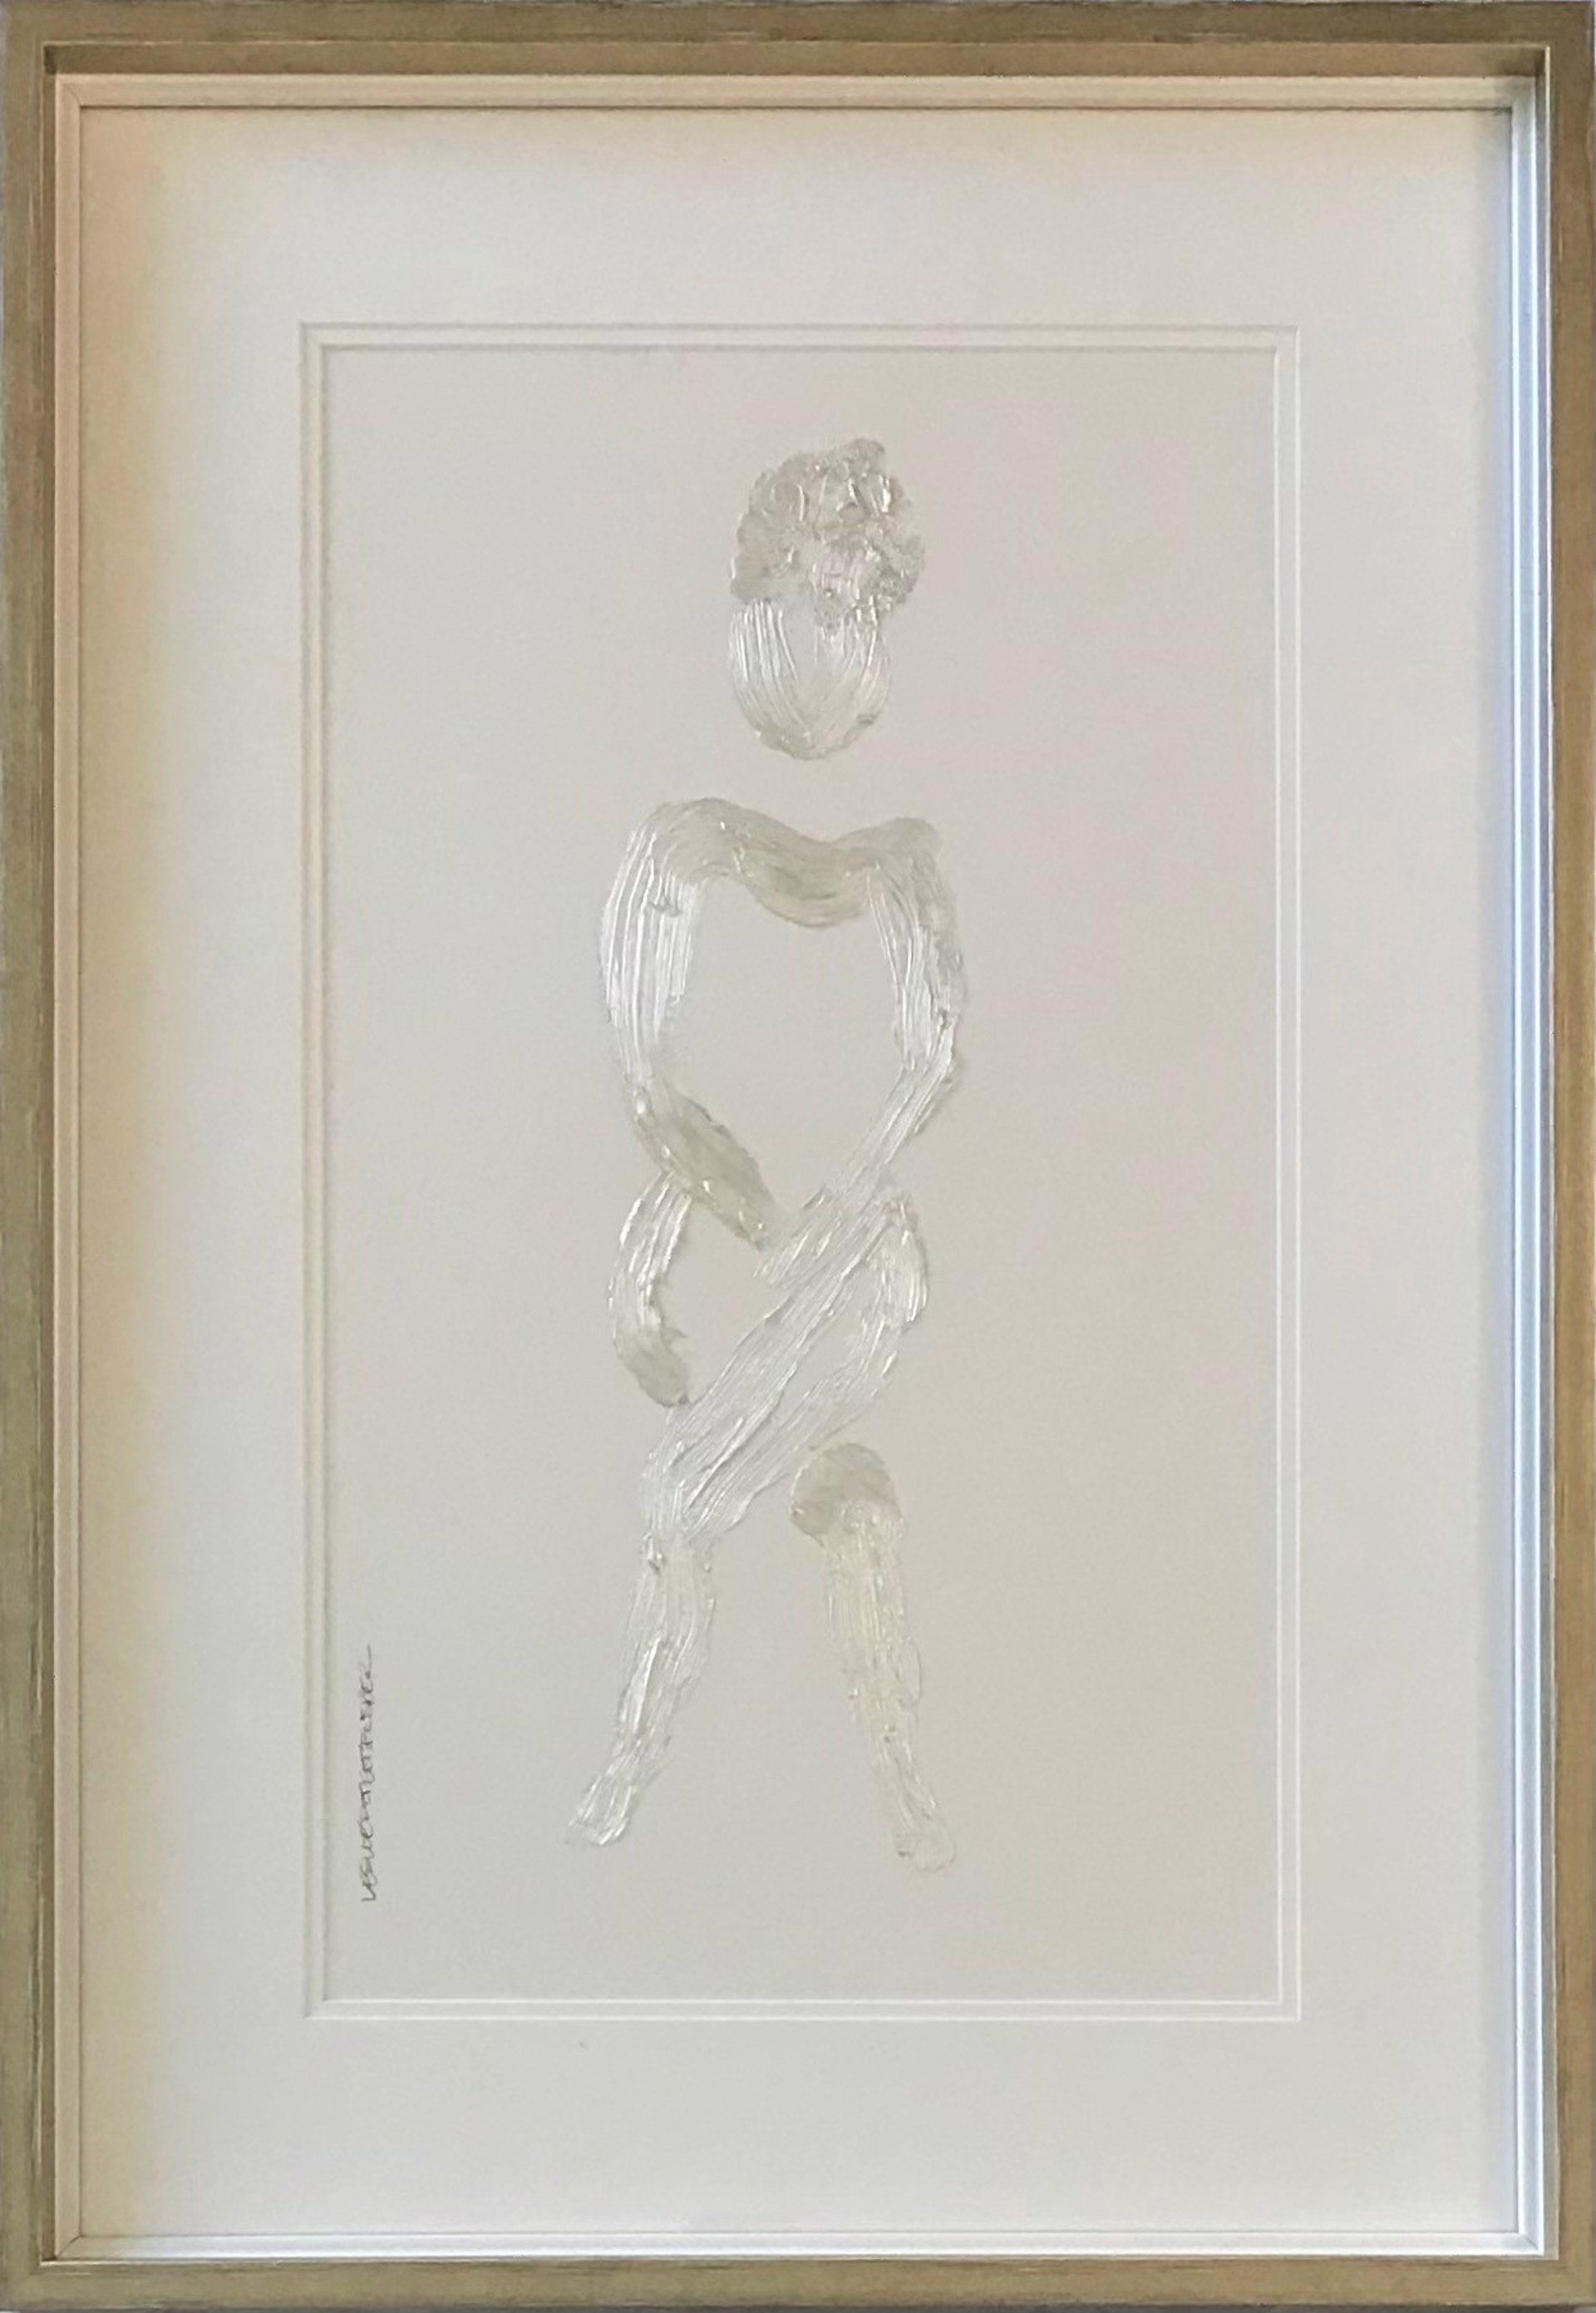 Pearl Figure No. 6 by Leslie Poteet Busker